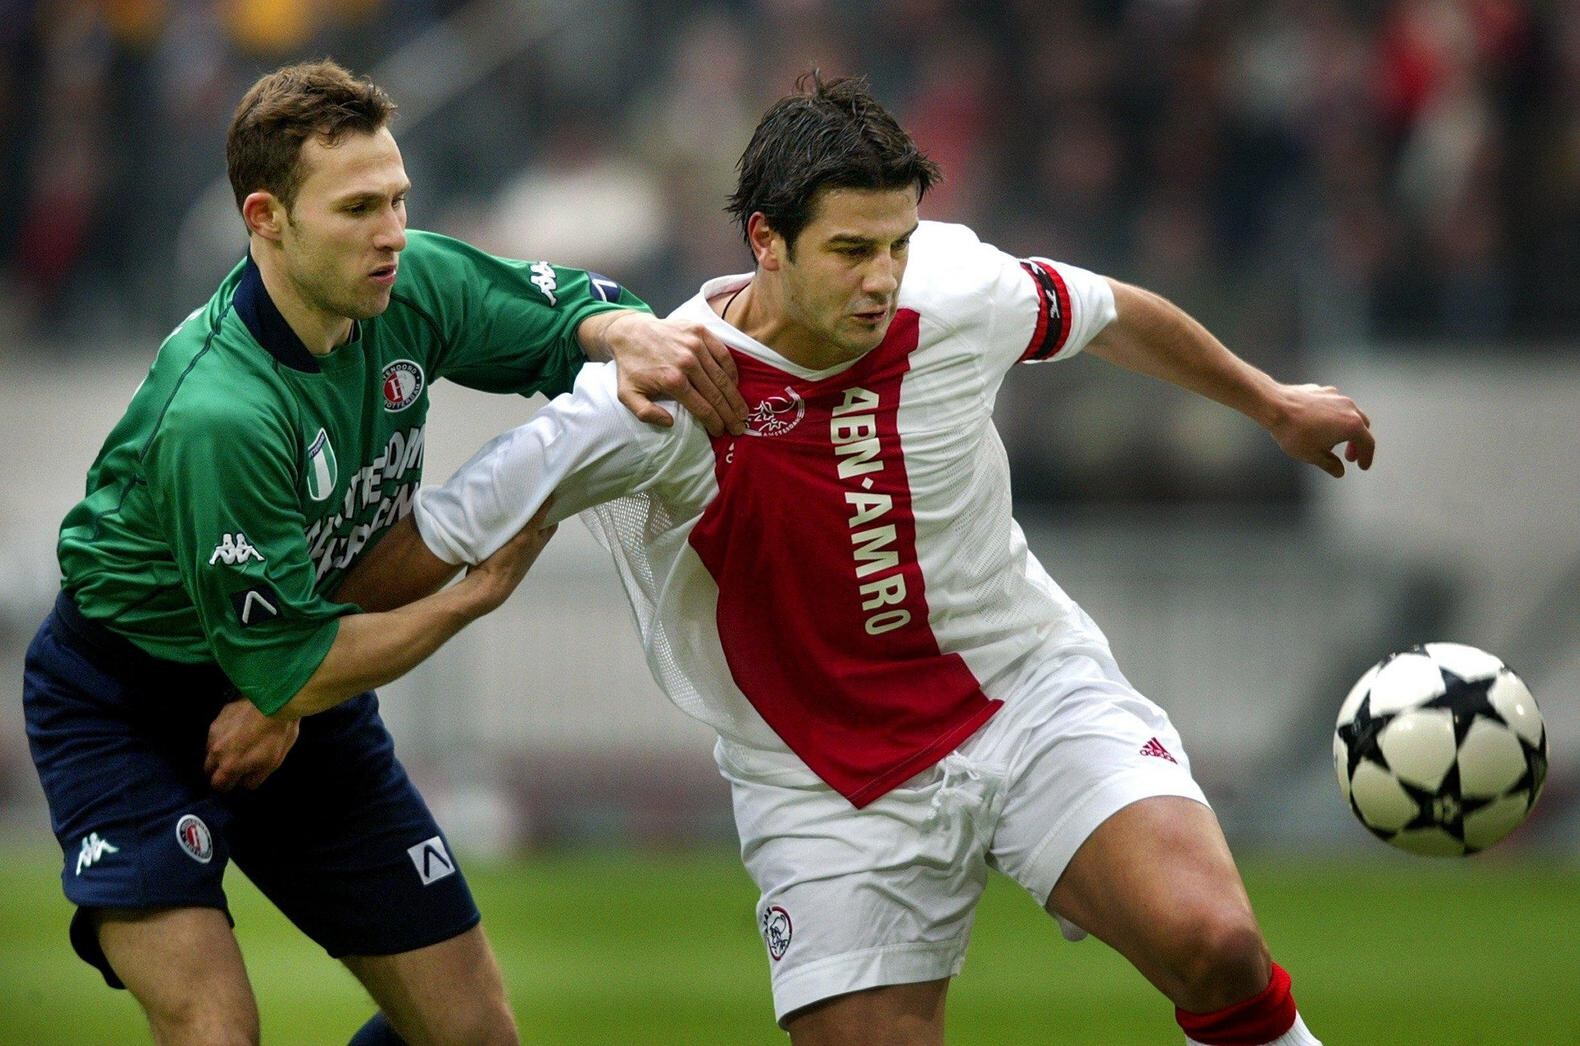 8. Cristian Chivu in 2003 van Ajax naar AS Roma: 18 miljoen euro